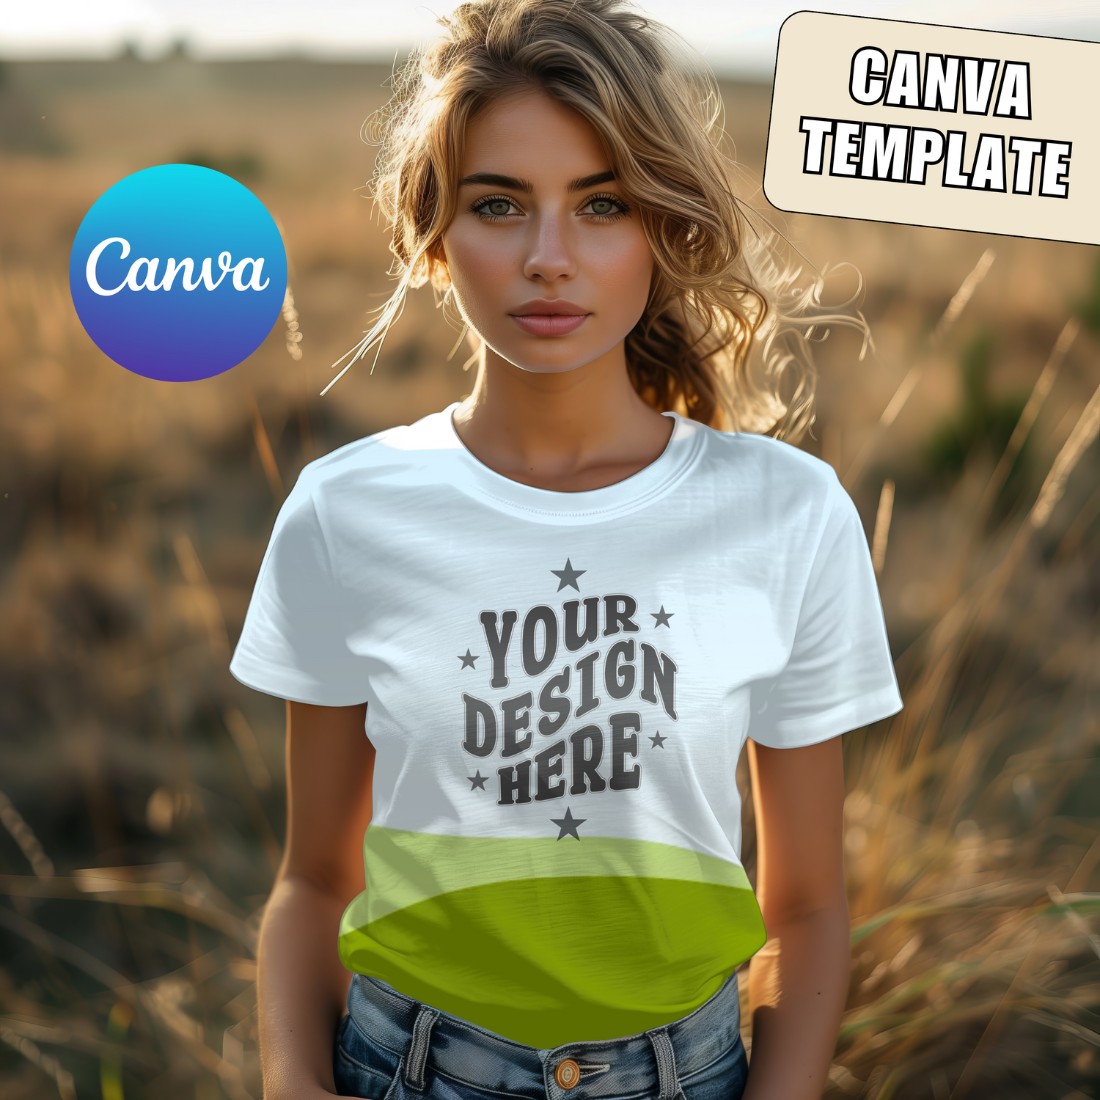 T-Shirt Mockup Canva Bella Canvas 3001 Template + Tutorial cover image.